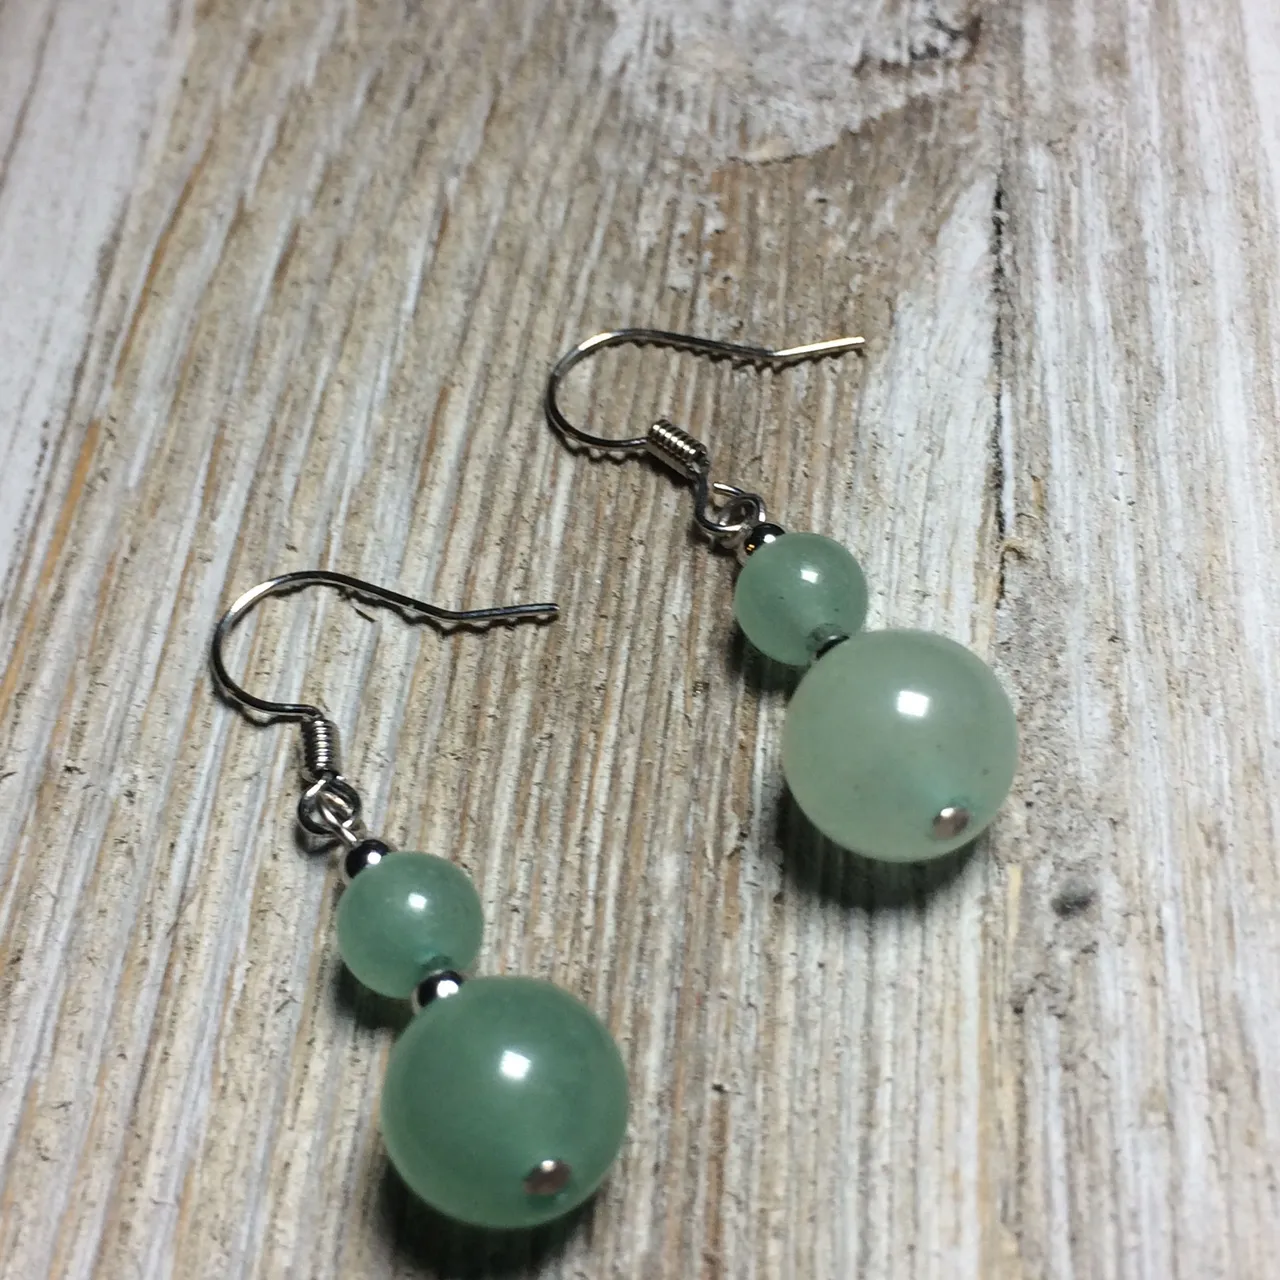 Green Jade earrings photo 1